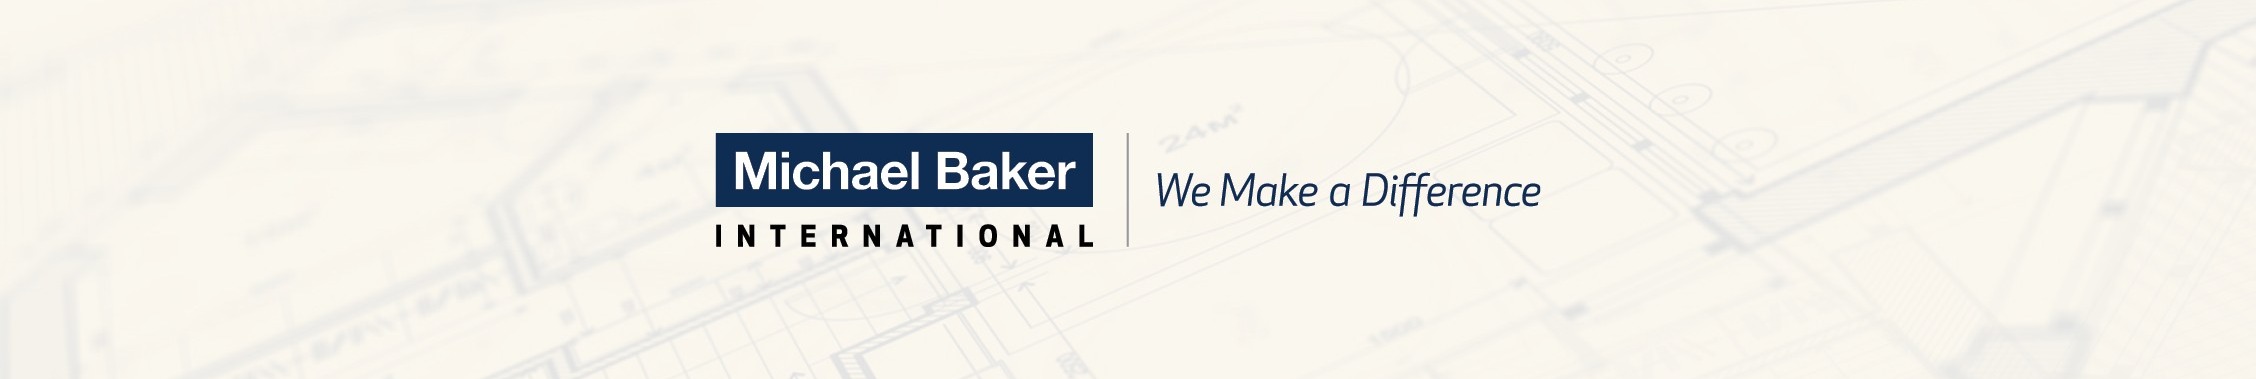 Michael Baker International, Inc. background